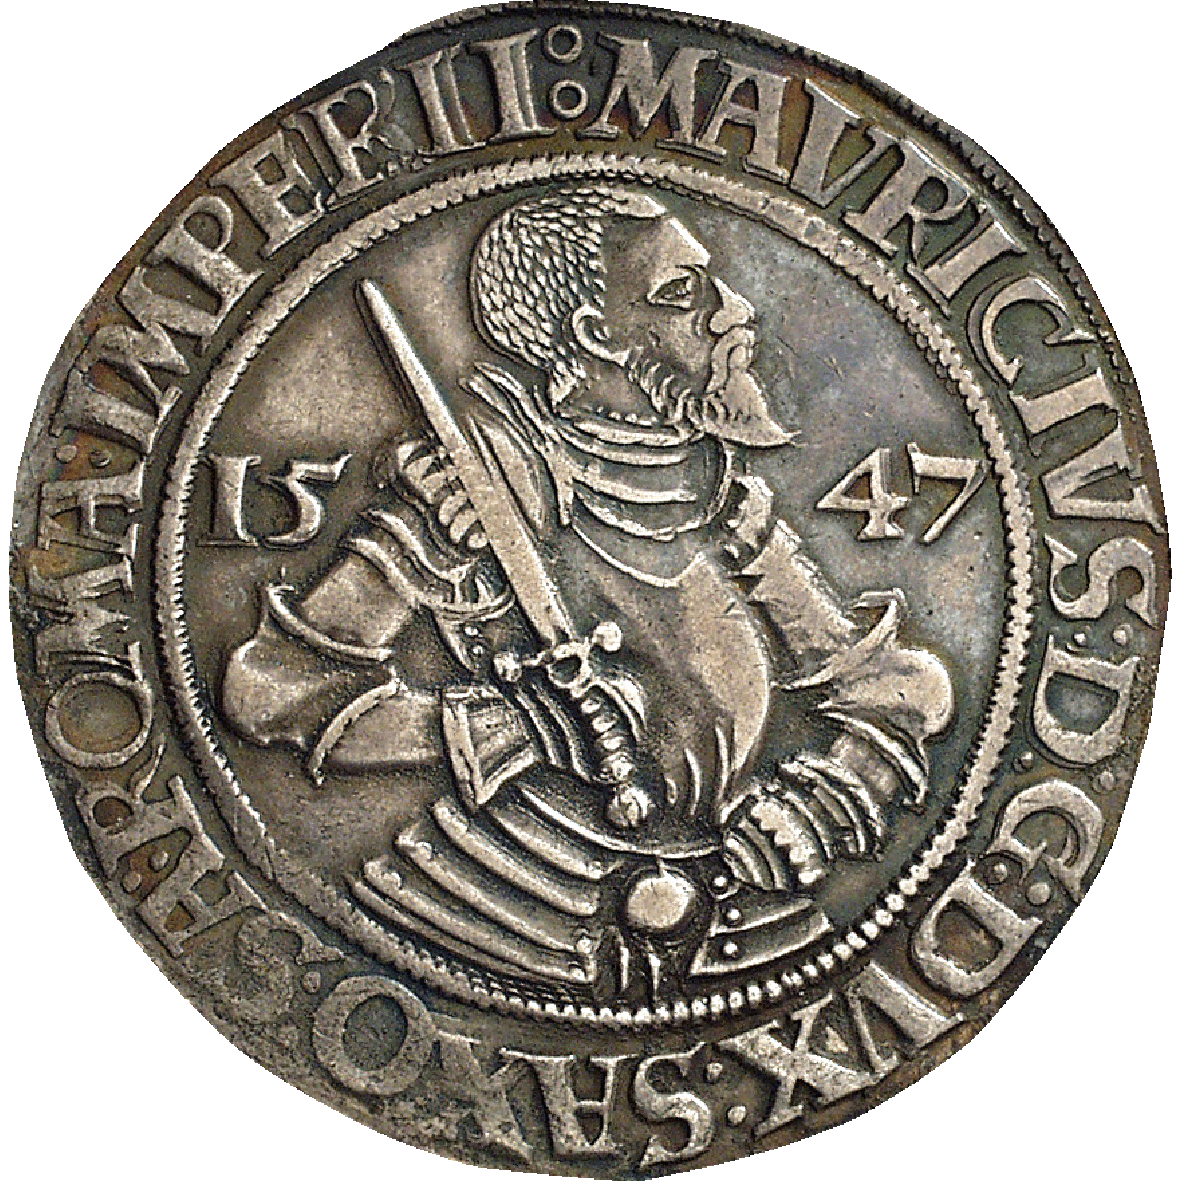 Holy Roman Empire, Duchy of Saxony, Maurice of Saxony, Taler 1547 (obverse)